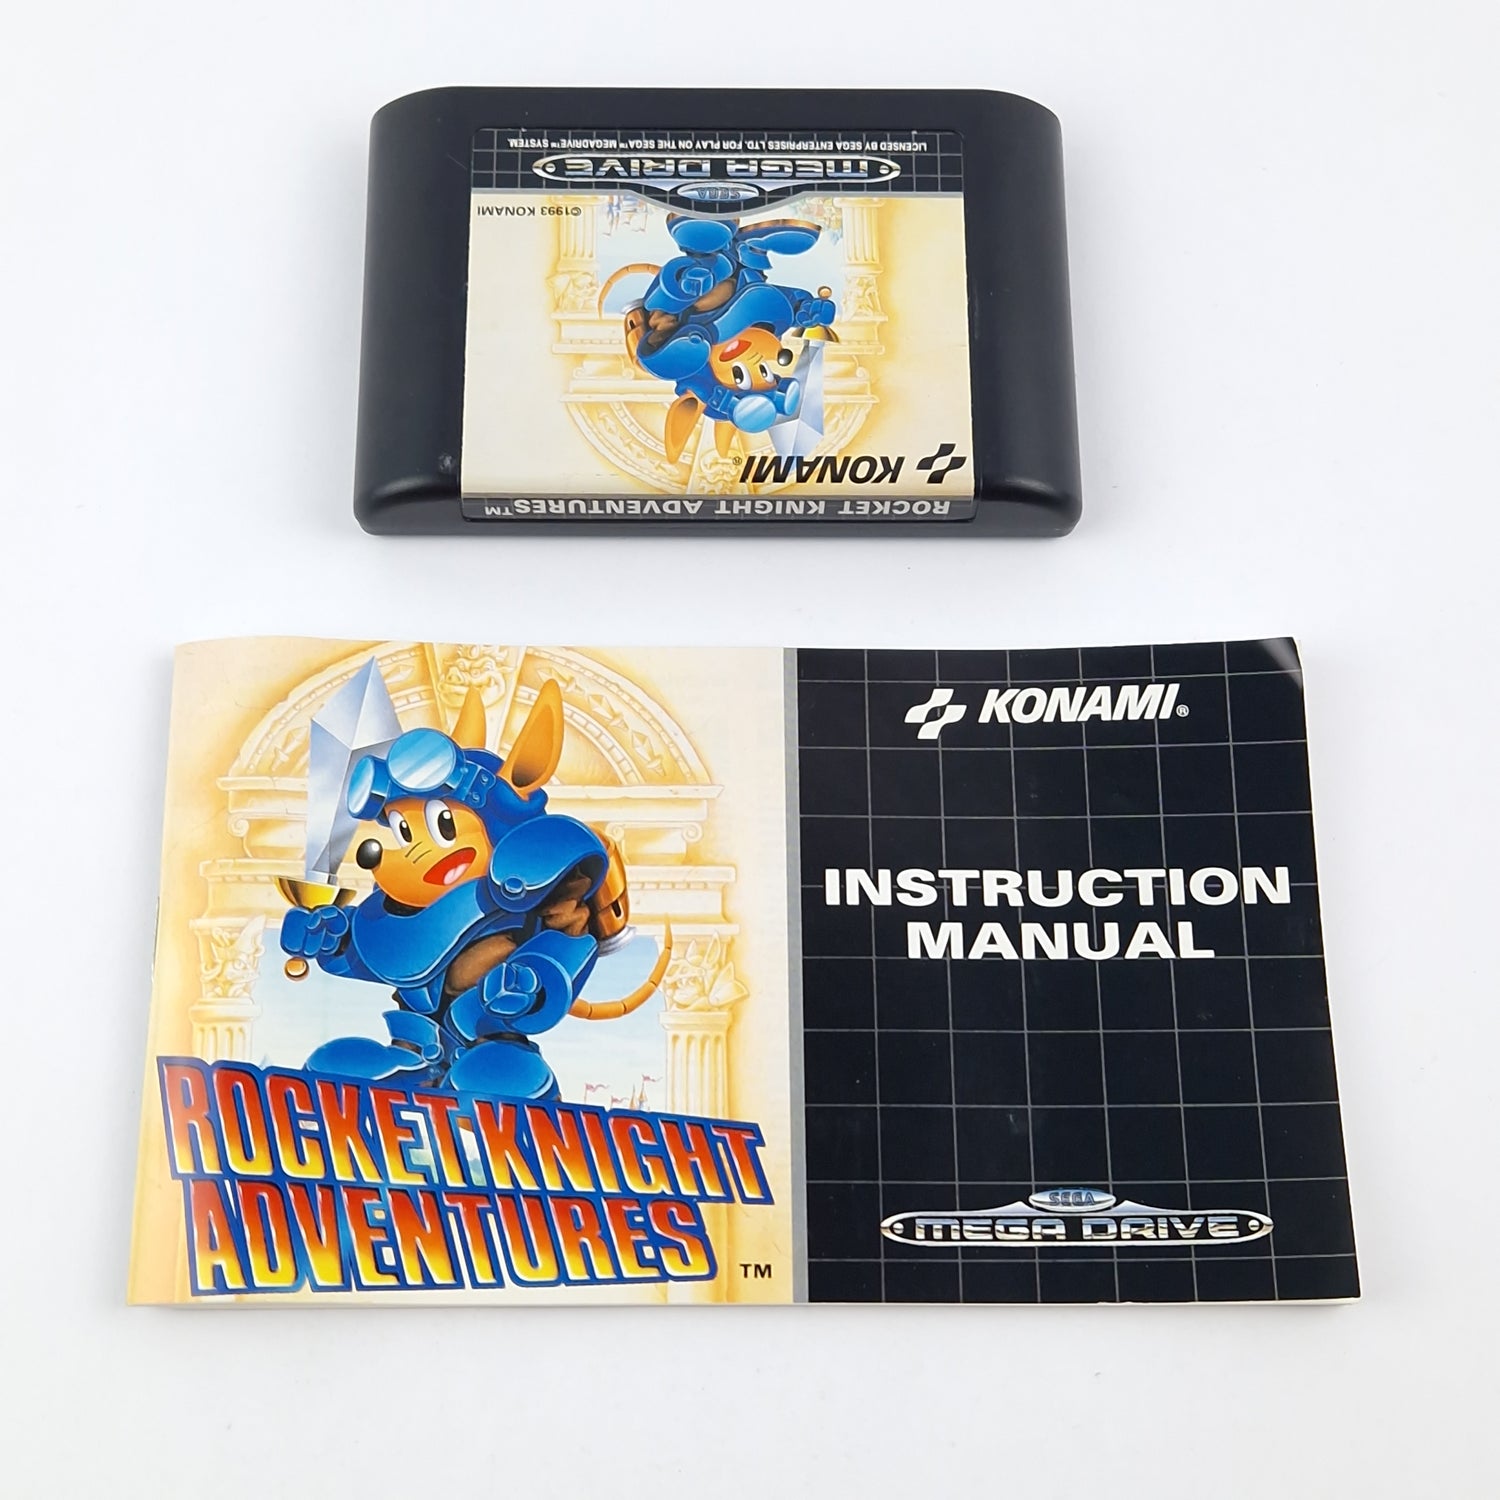 Sega Mega Drive Game: Rocket Knight Adventures - Module Instructions OVP cib PAL